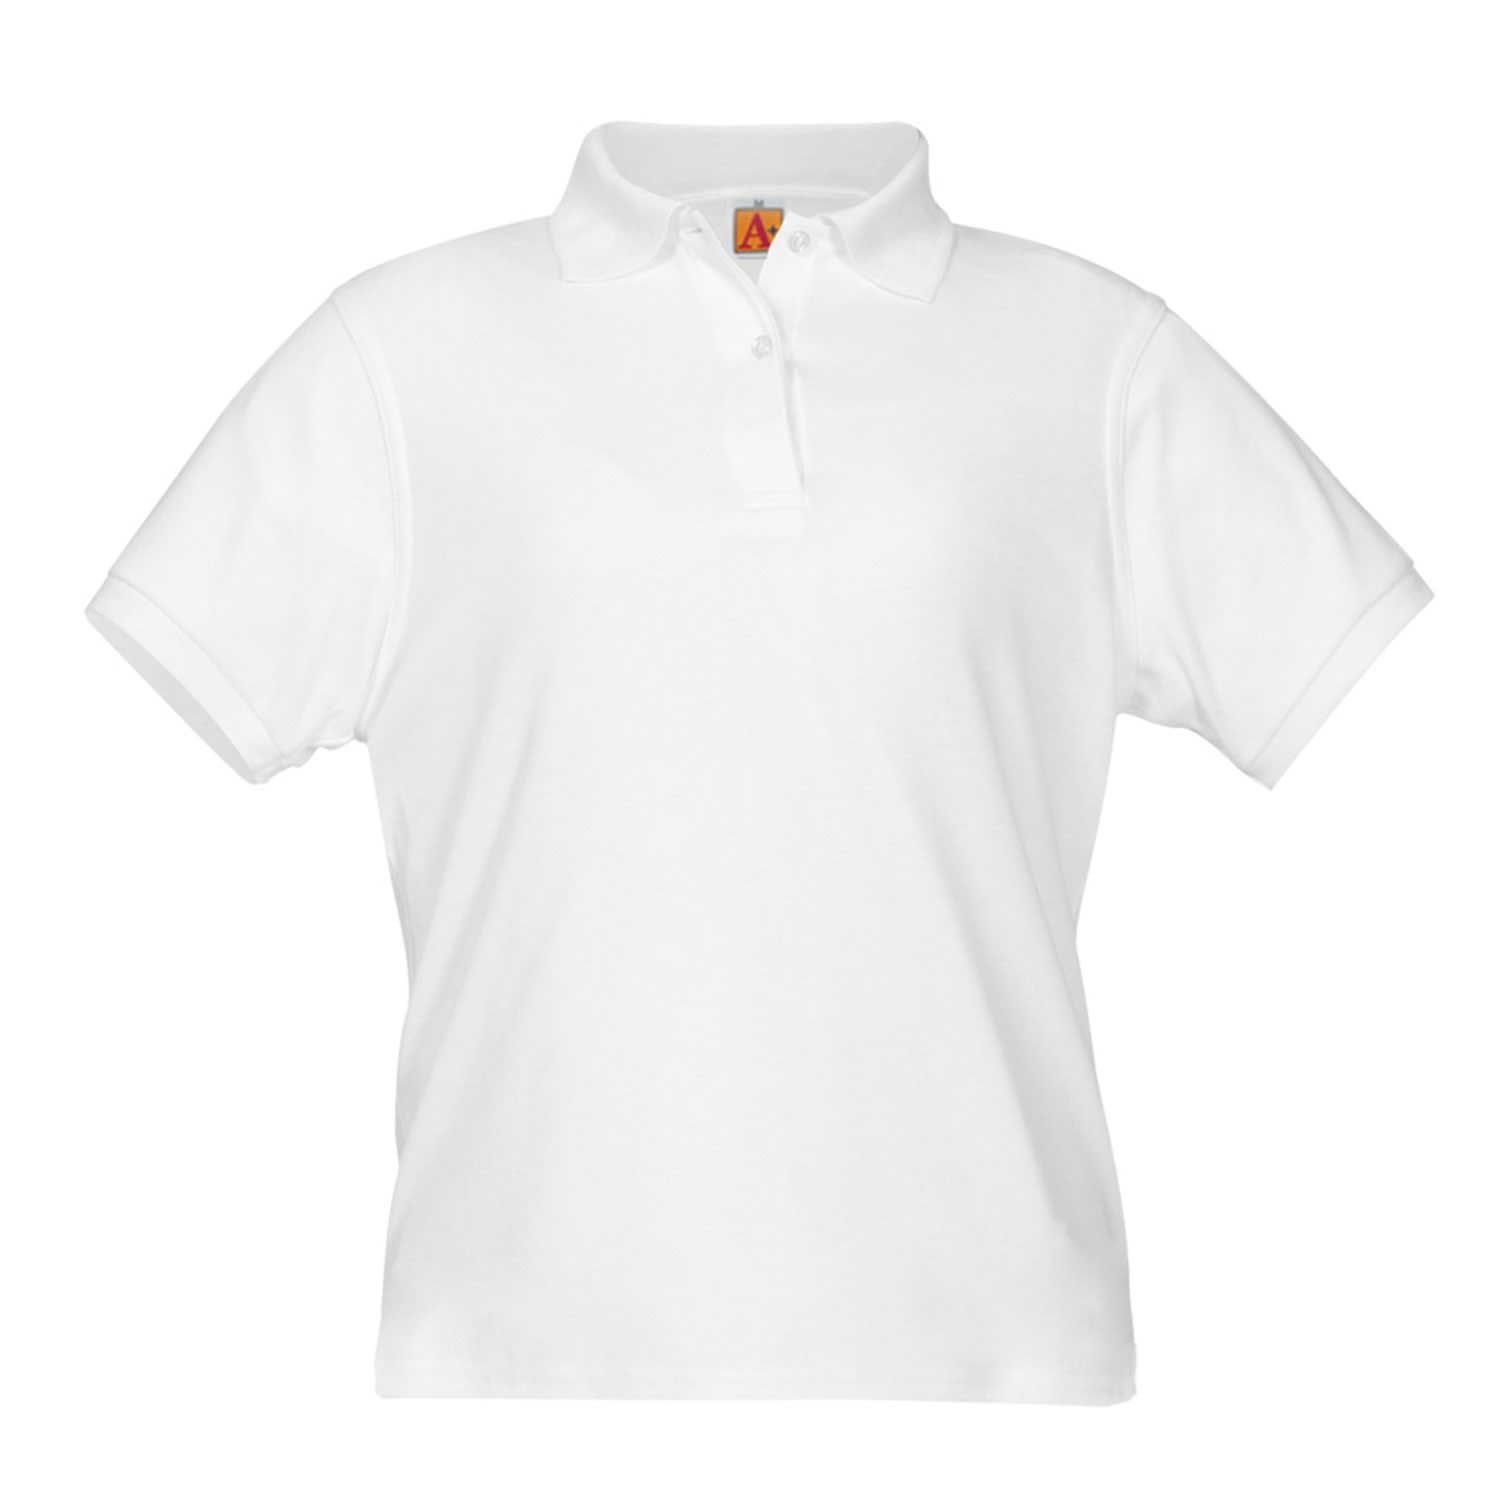 St. Luke the Evangelist - Girls Fitted Interlock Knit Polo Shirt - Short Sleeve - #9737